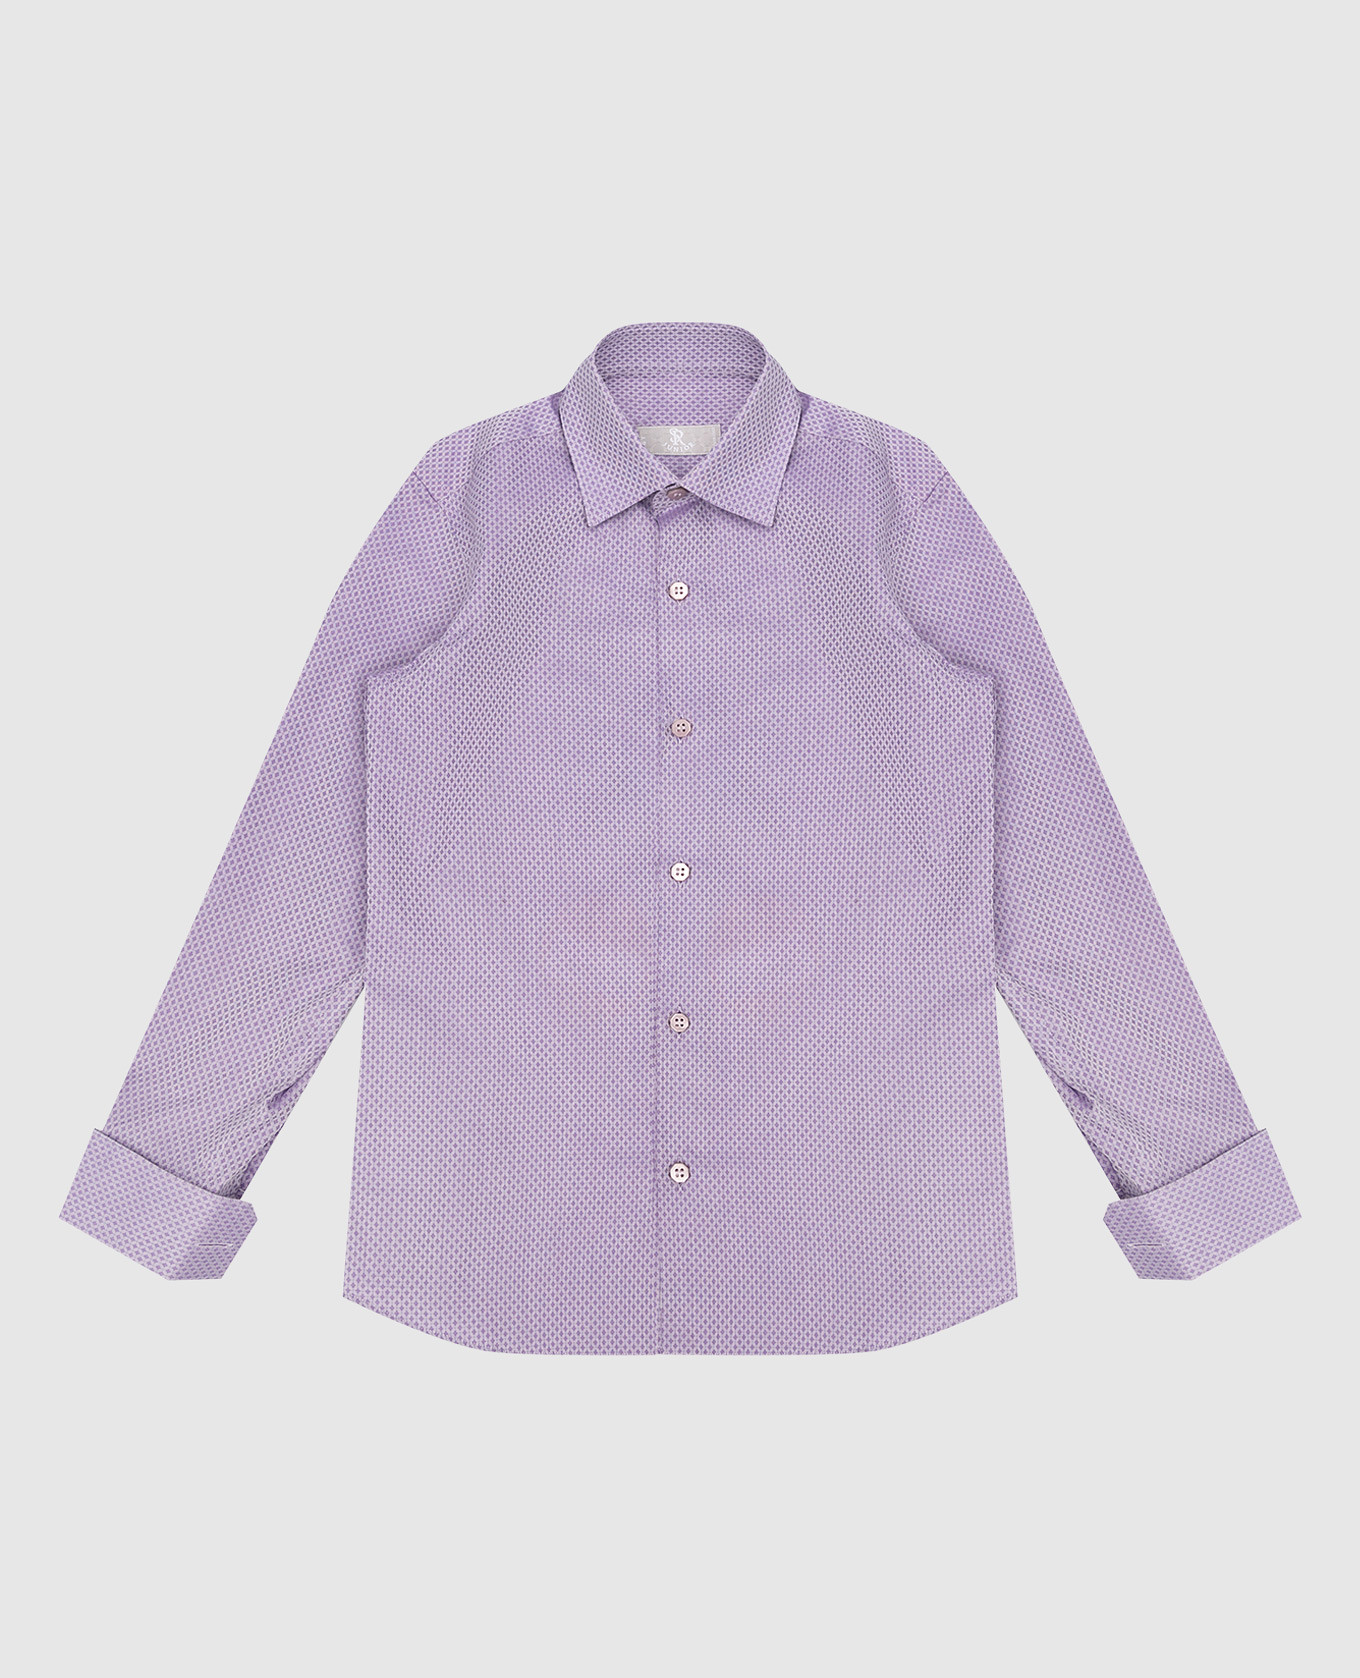 Children's purple shirt in a geometric pattern